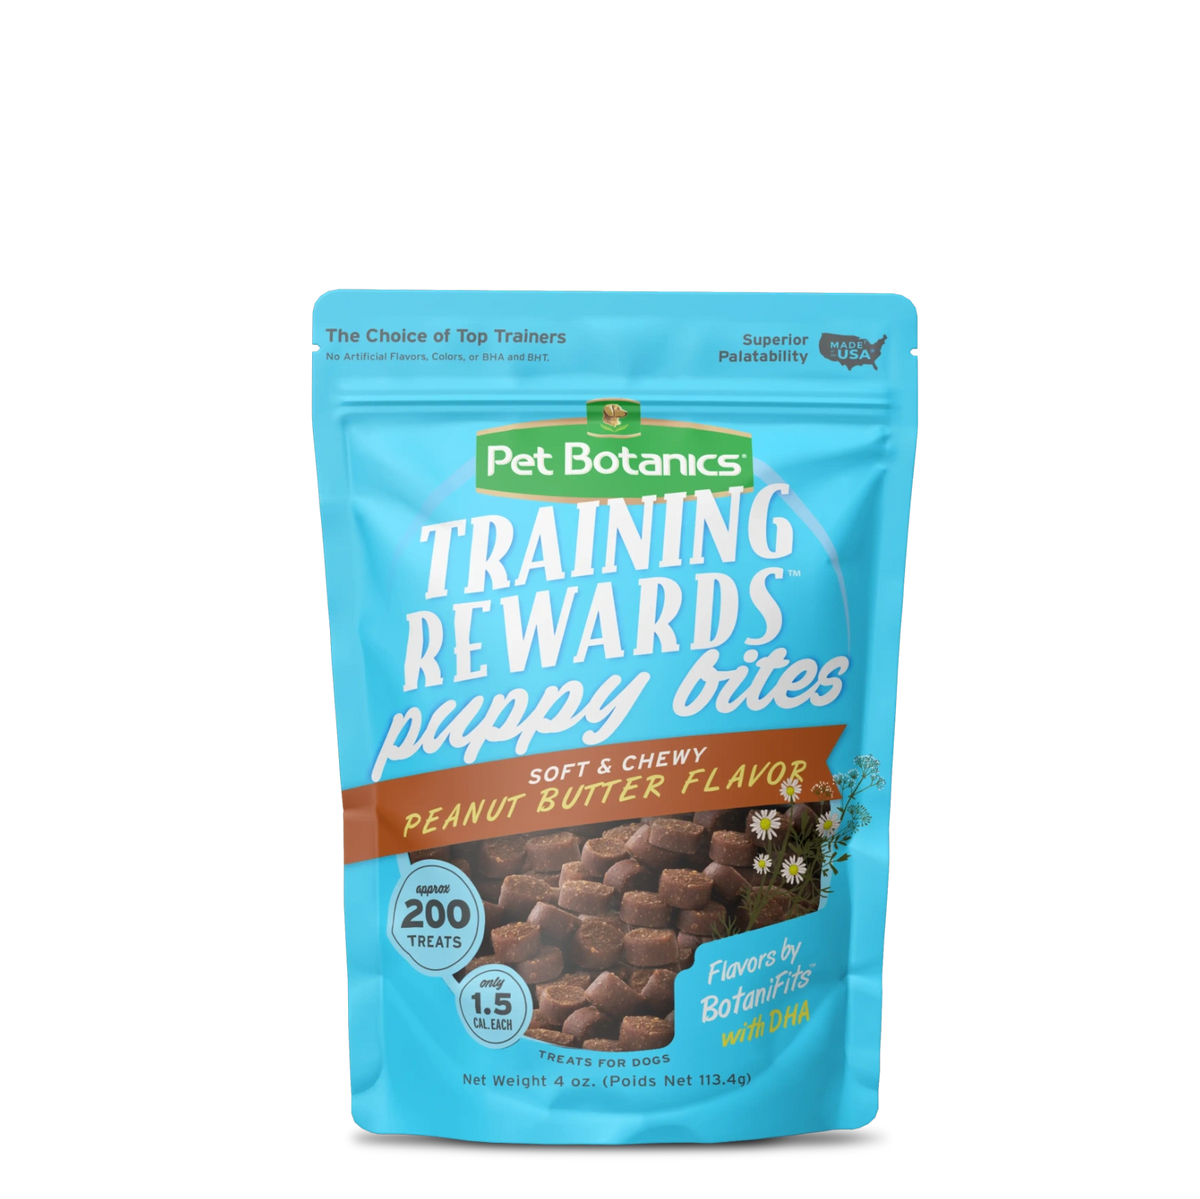 Training Rewards Soft & Chewy Dog Treats, Mini, 4-oz bag- Peanut Butter